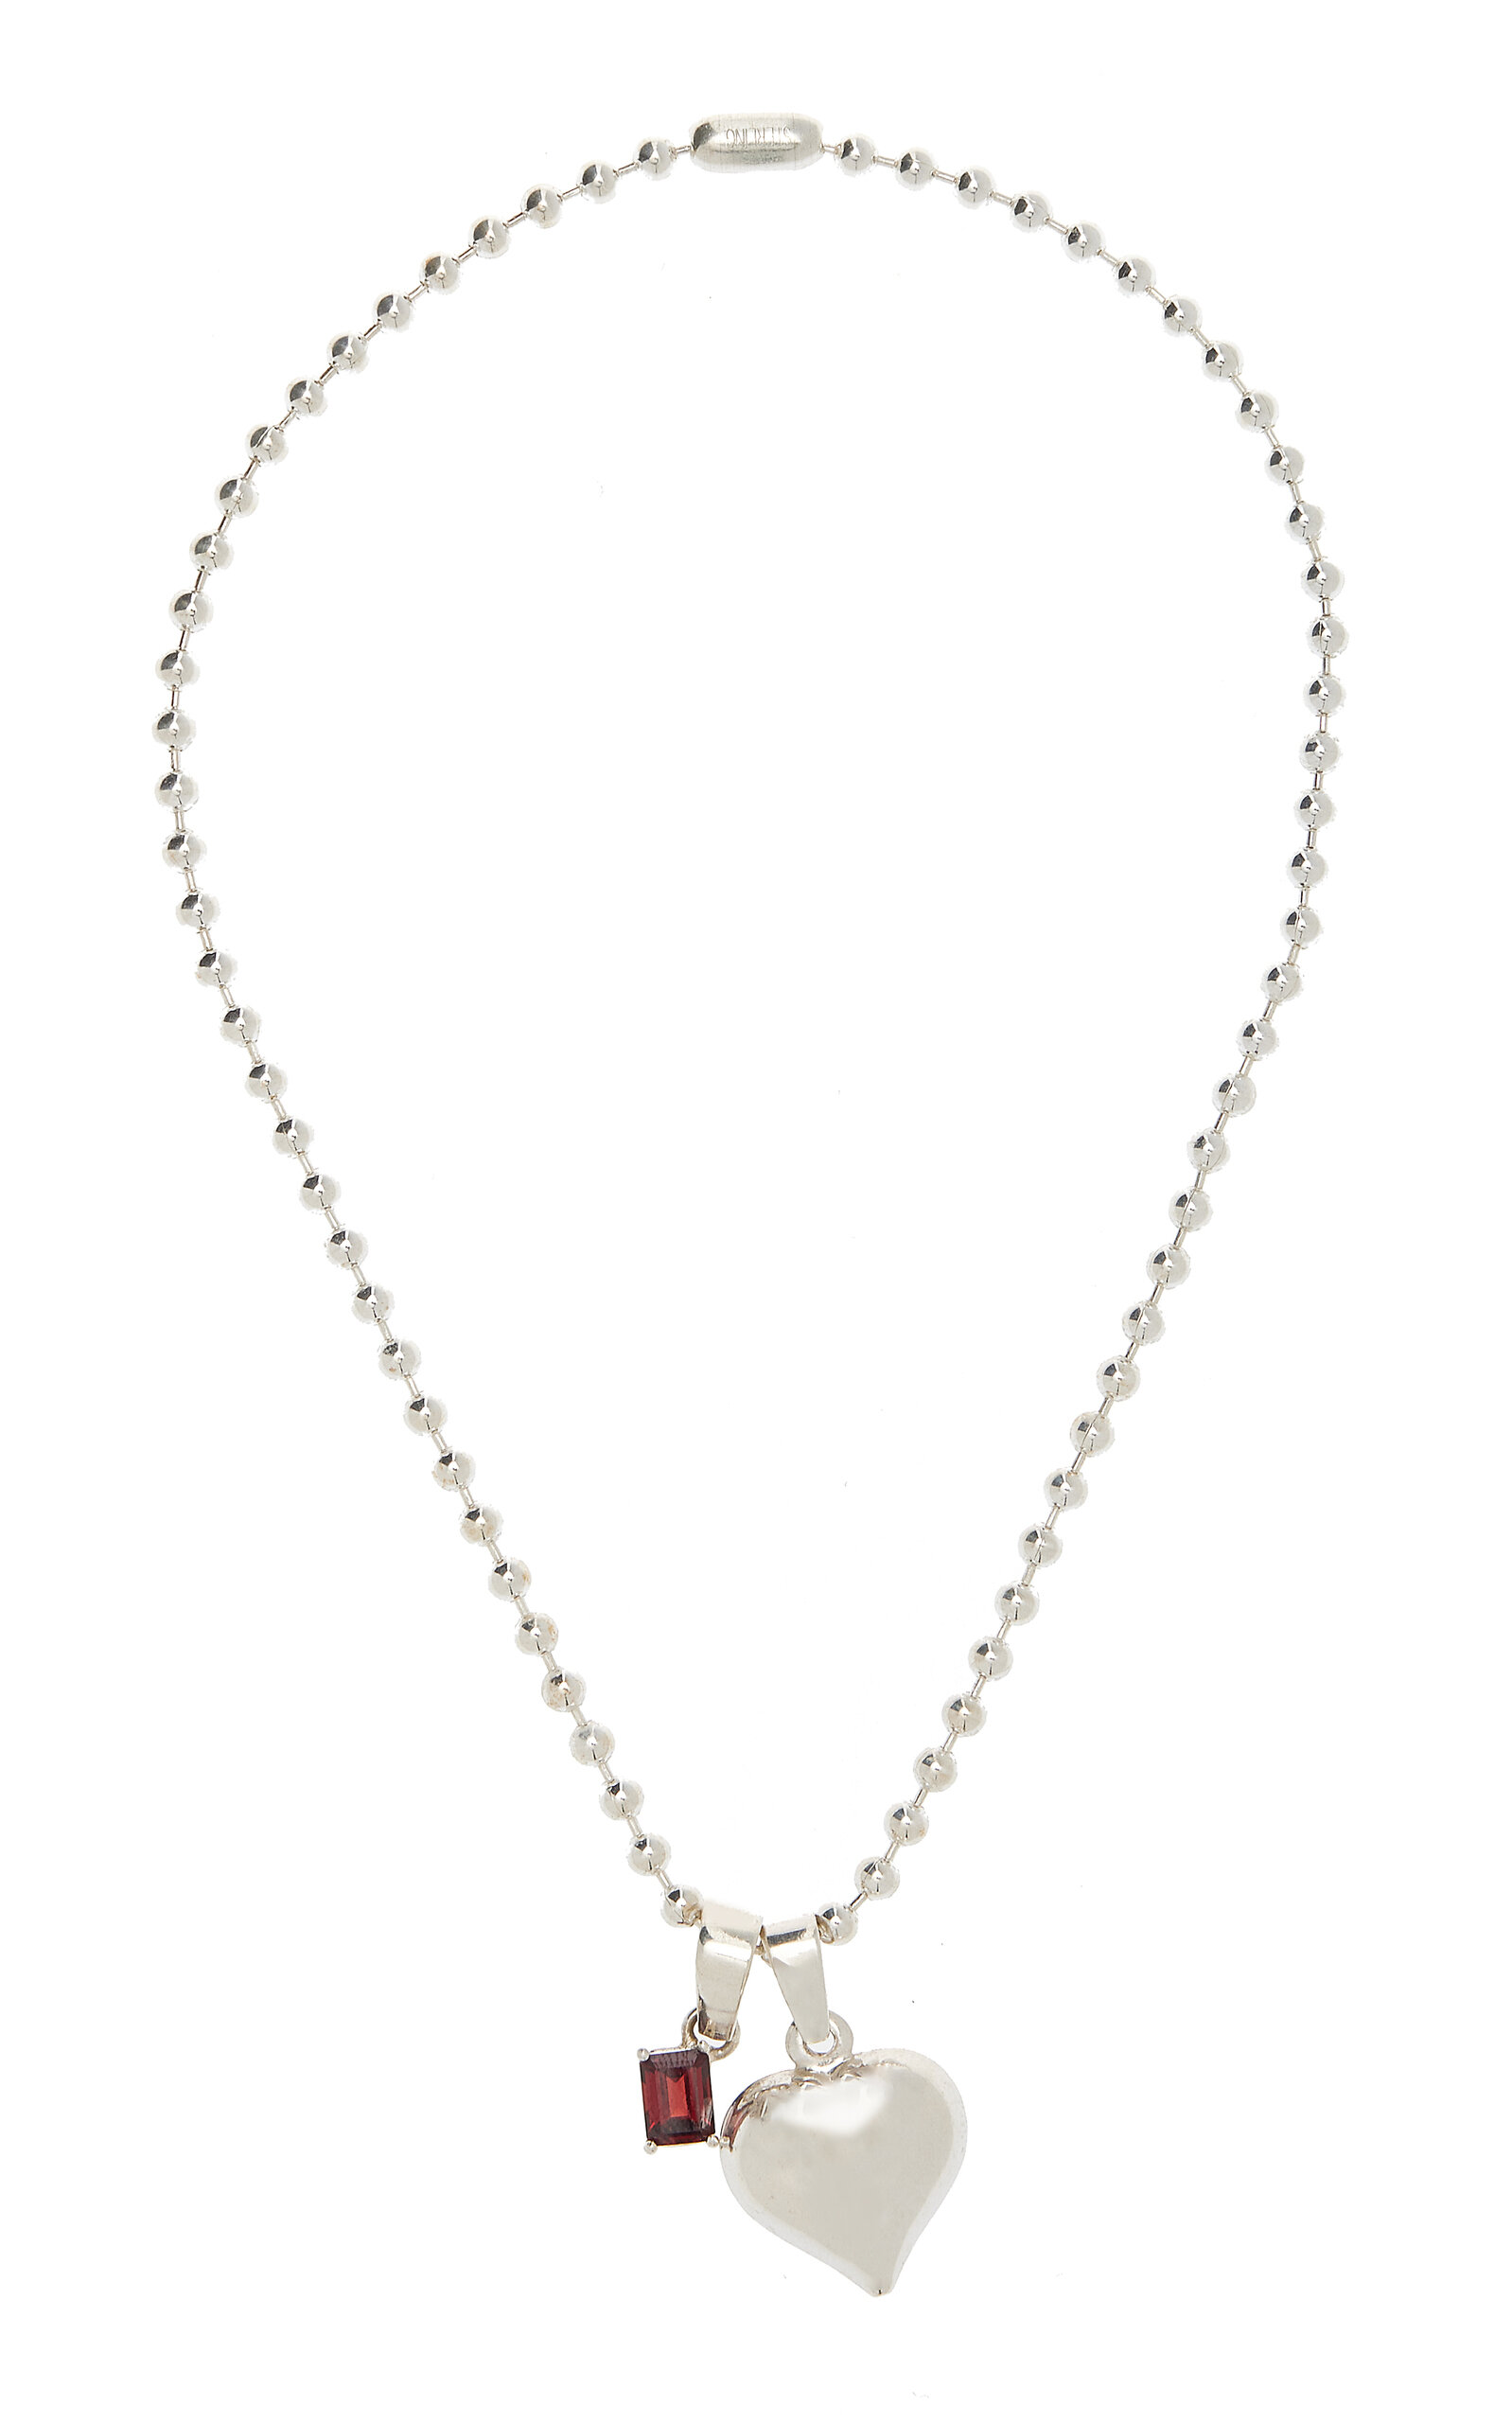 Martine Ali Women's Exclusive Averi Garnet Sterling Silver Necklace